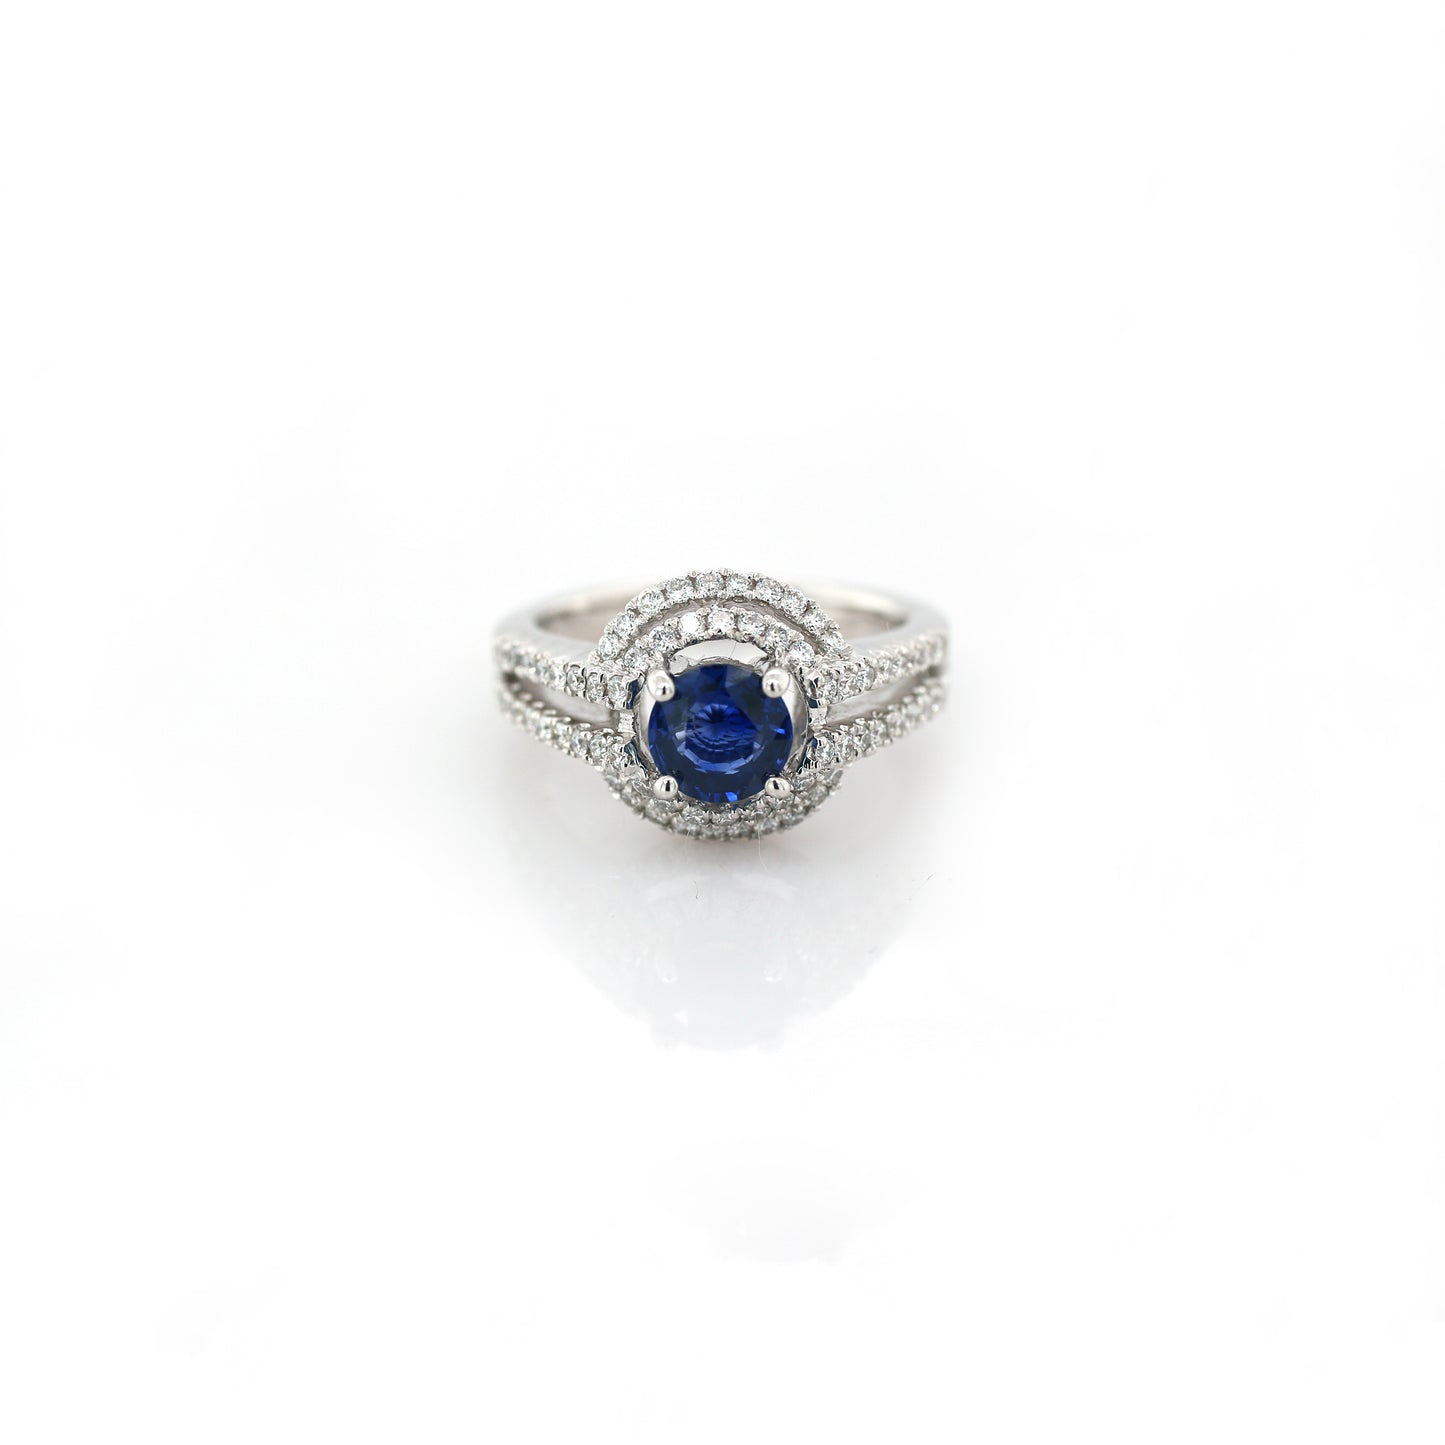 Blue Sapphire & Diamond Ring - 18K White Gold 6.88gm